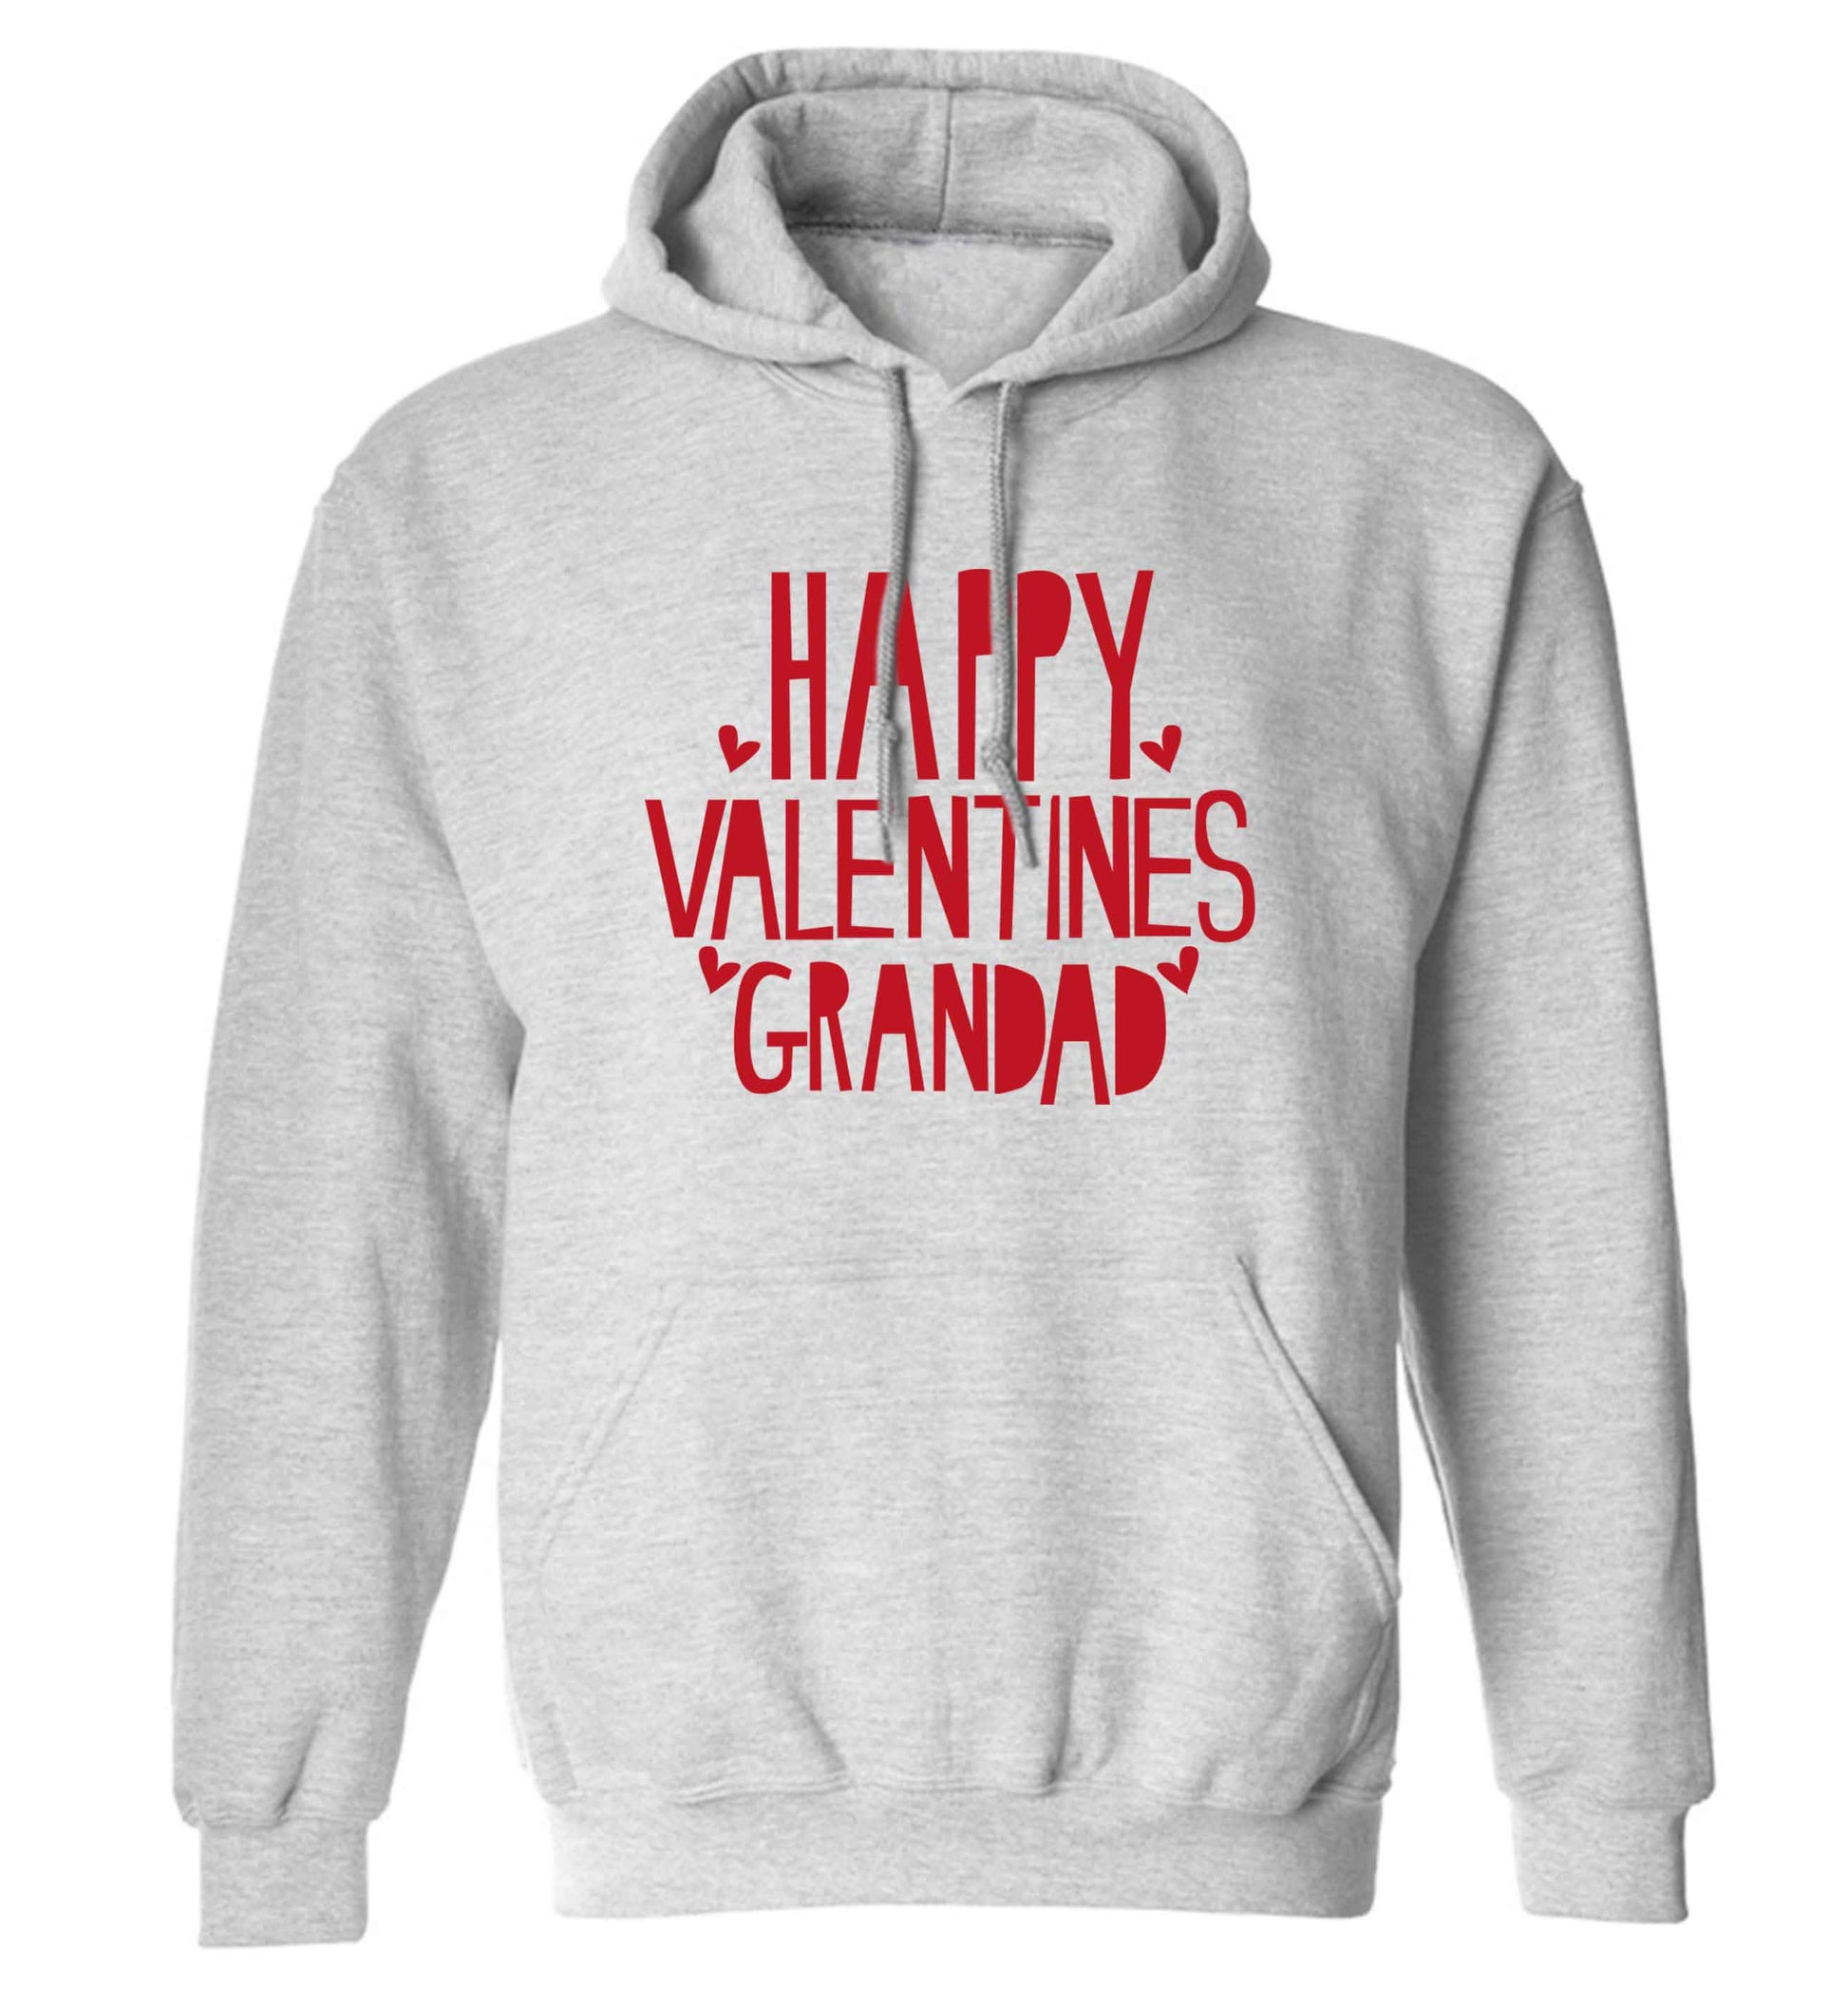 Happy valentines grandad adults unisex grey hoodie 2XL